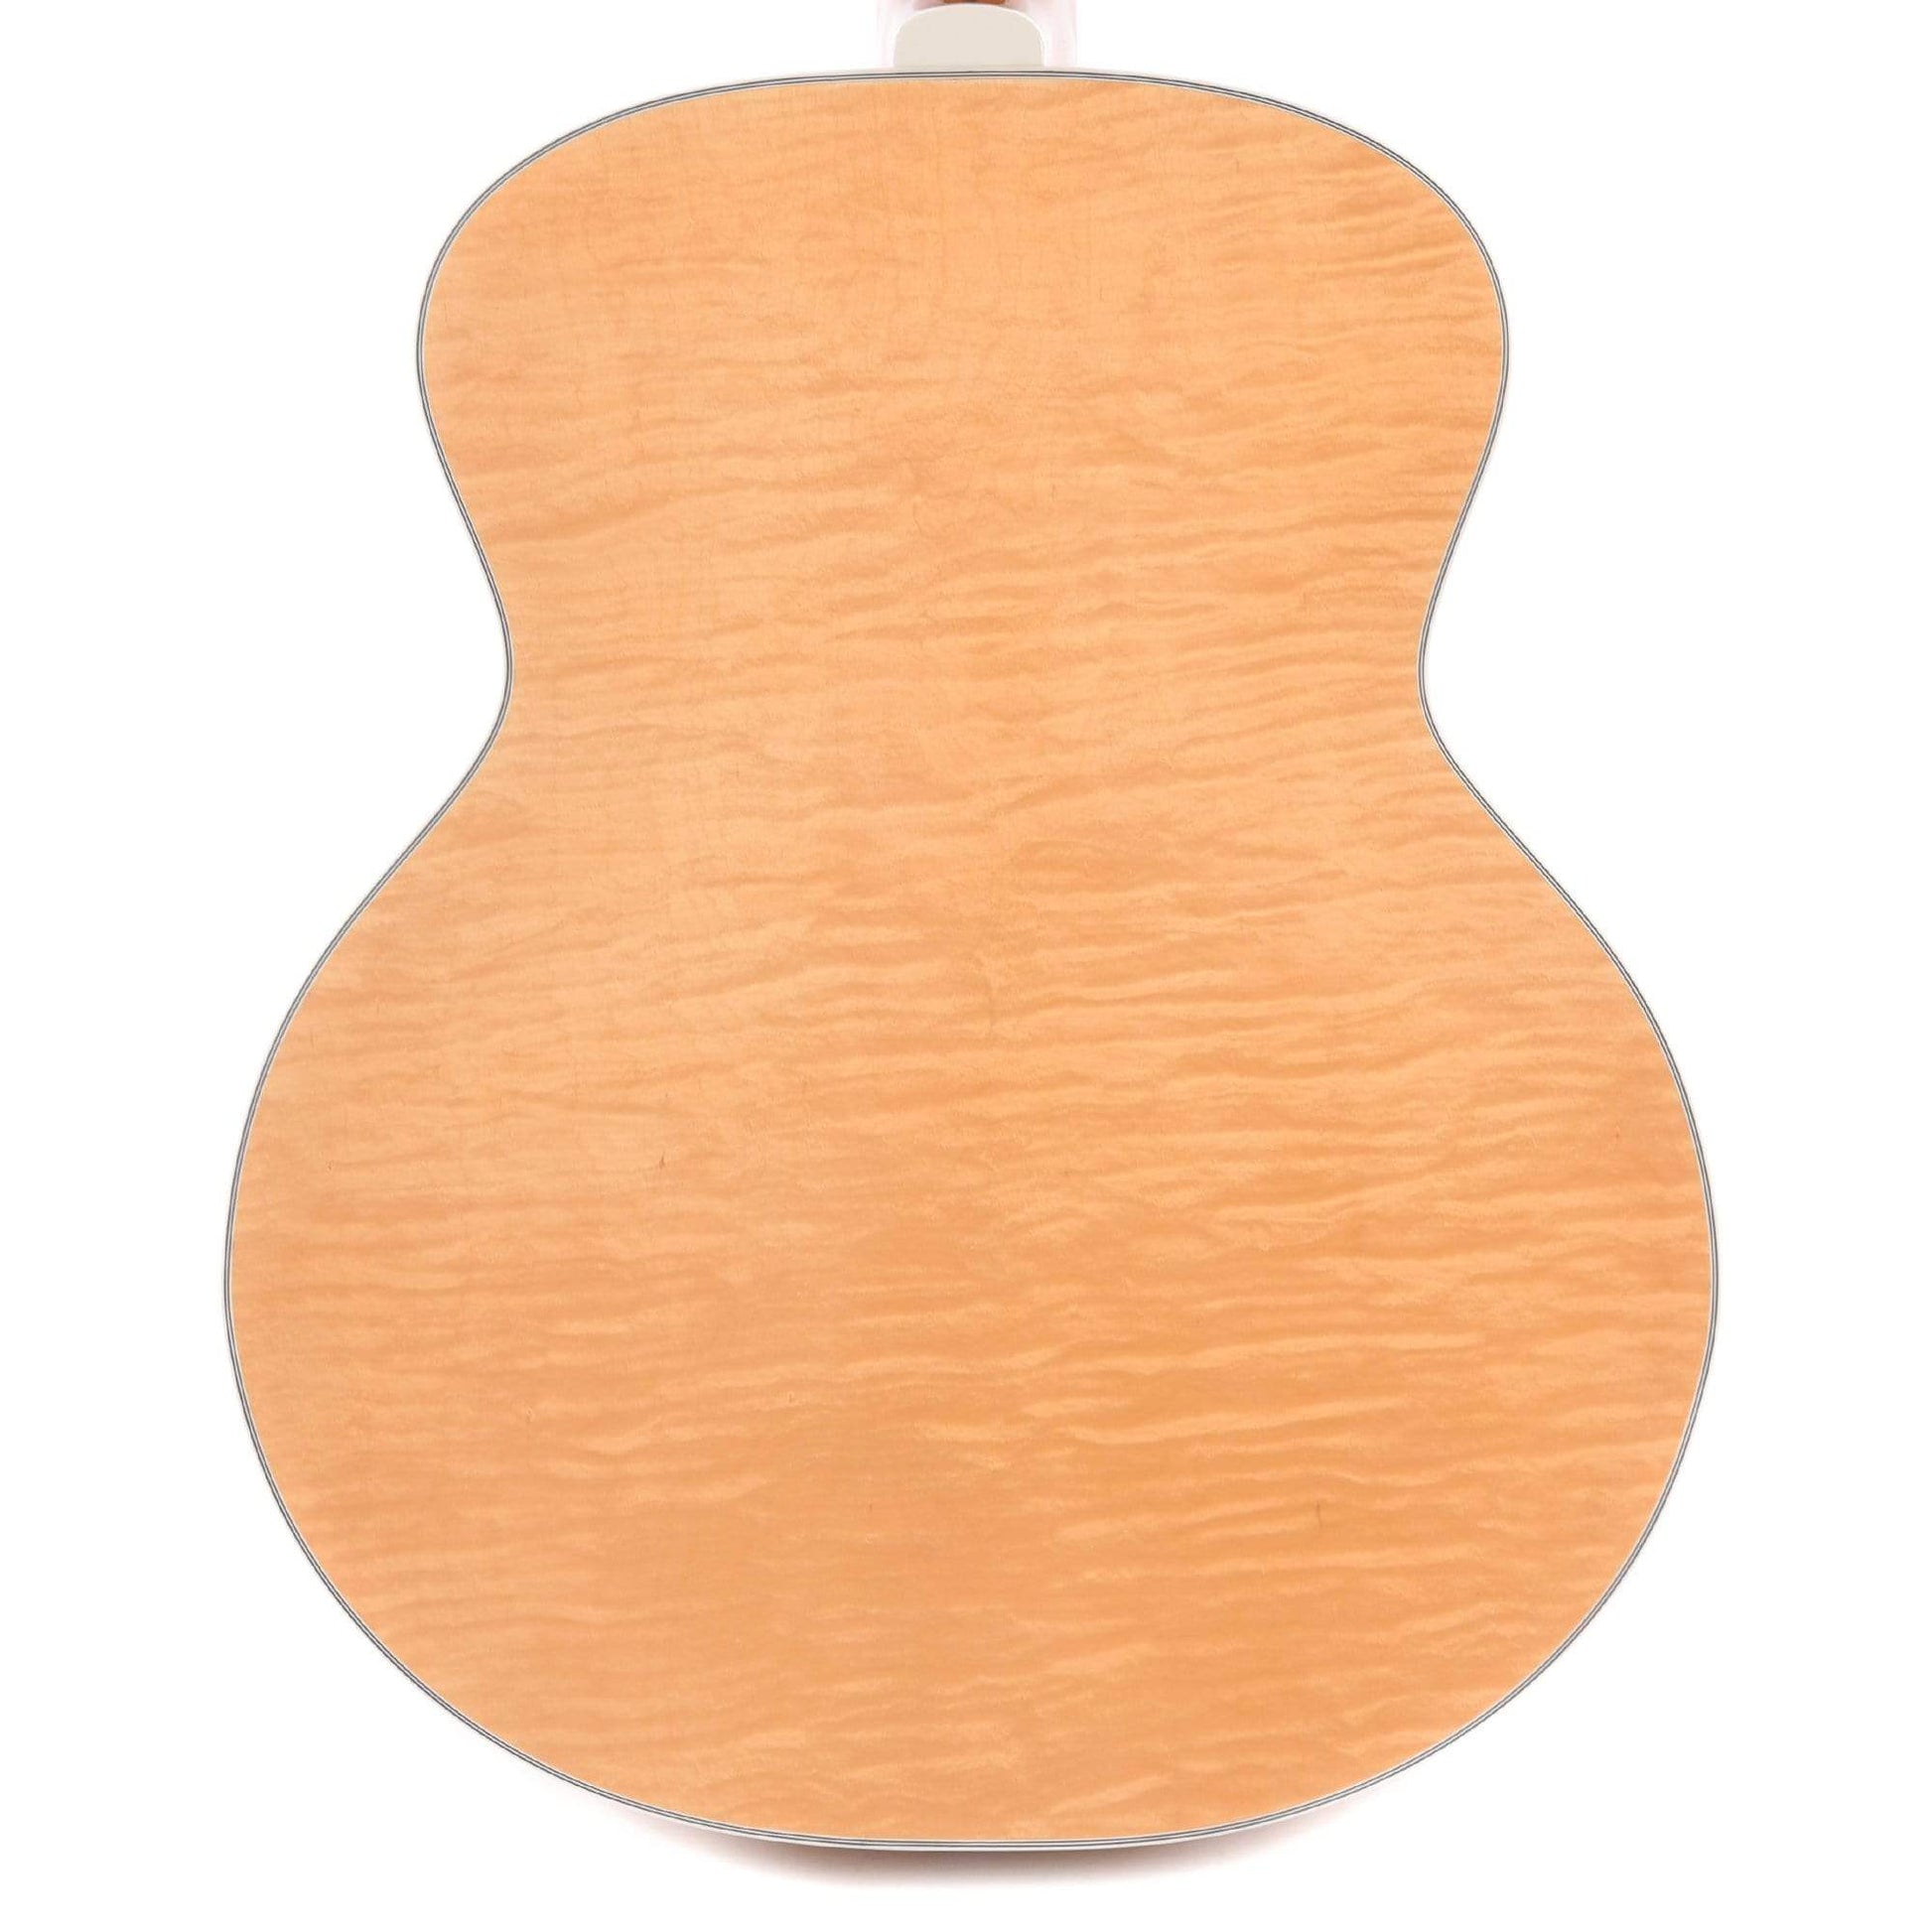 Guild USA F-512 Maple Jumbo 12-String Blonde Acoustic Guitars / Jumbo